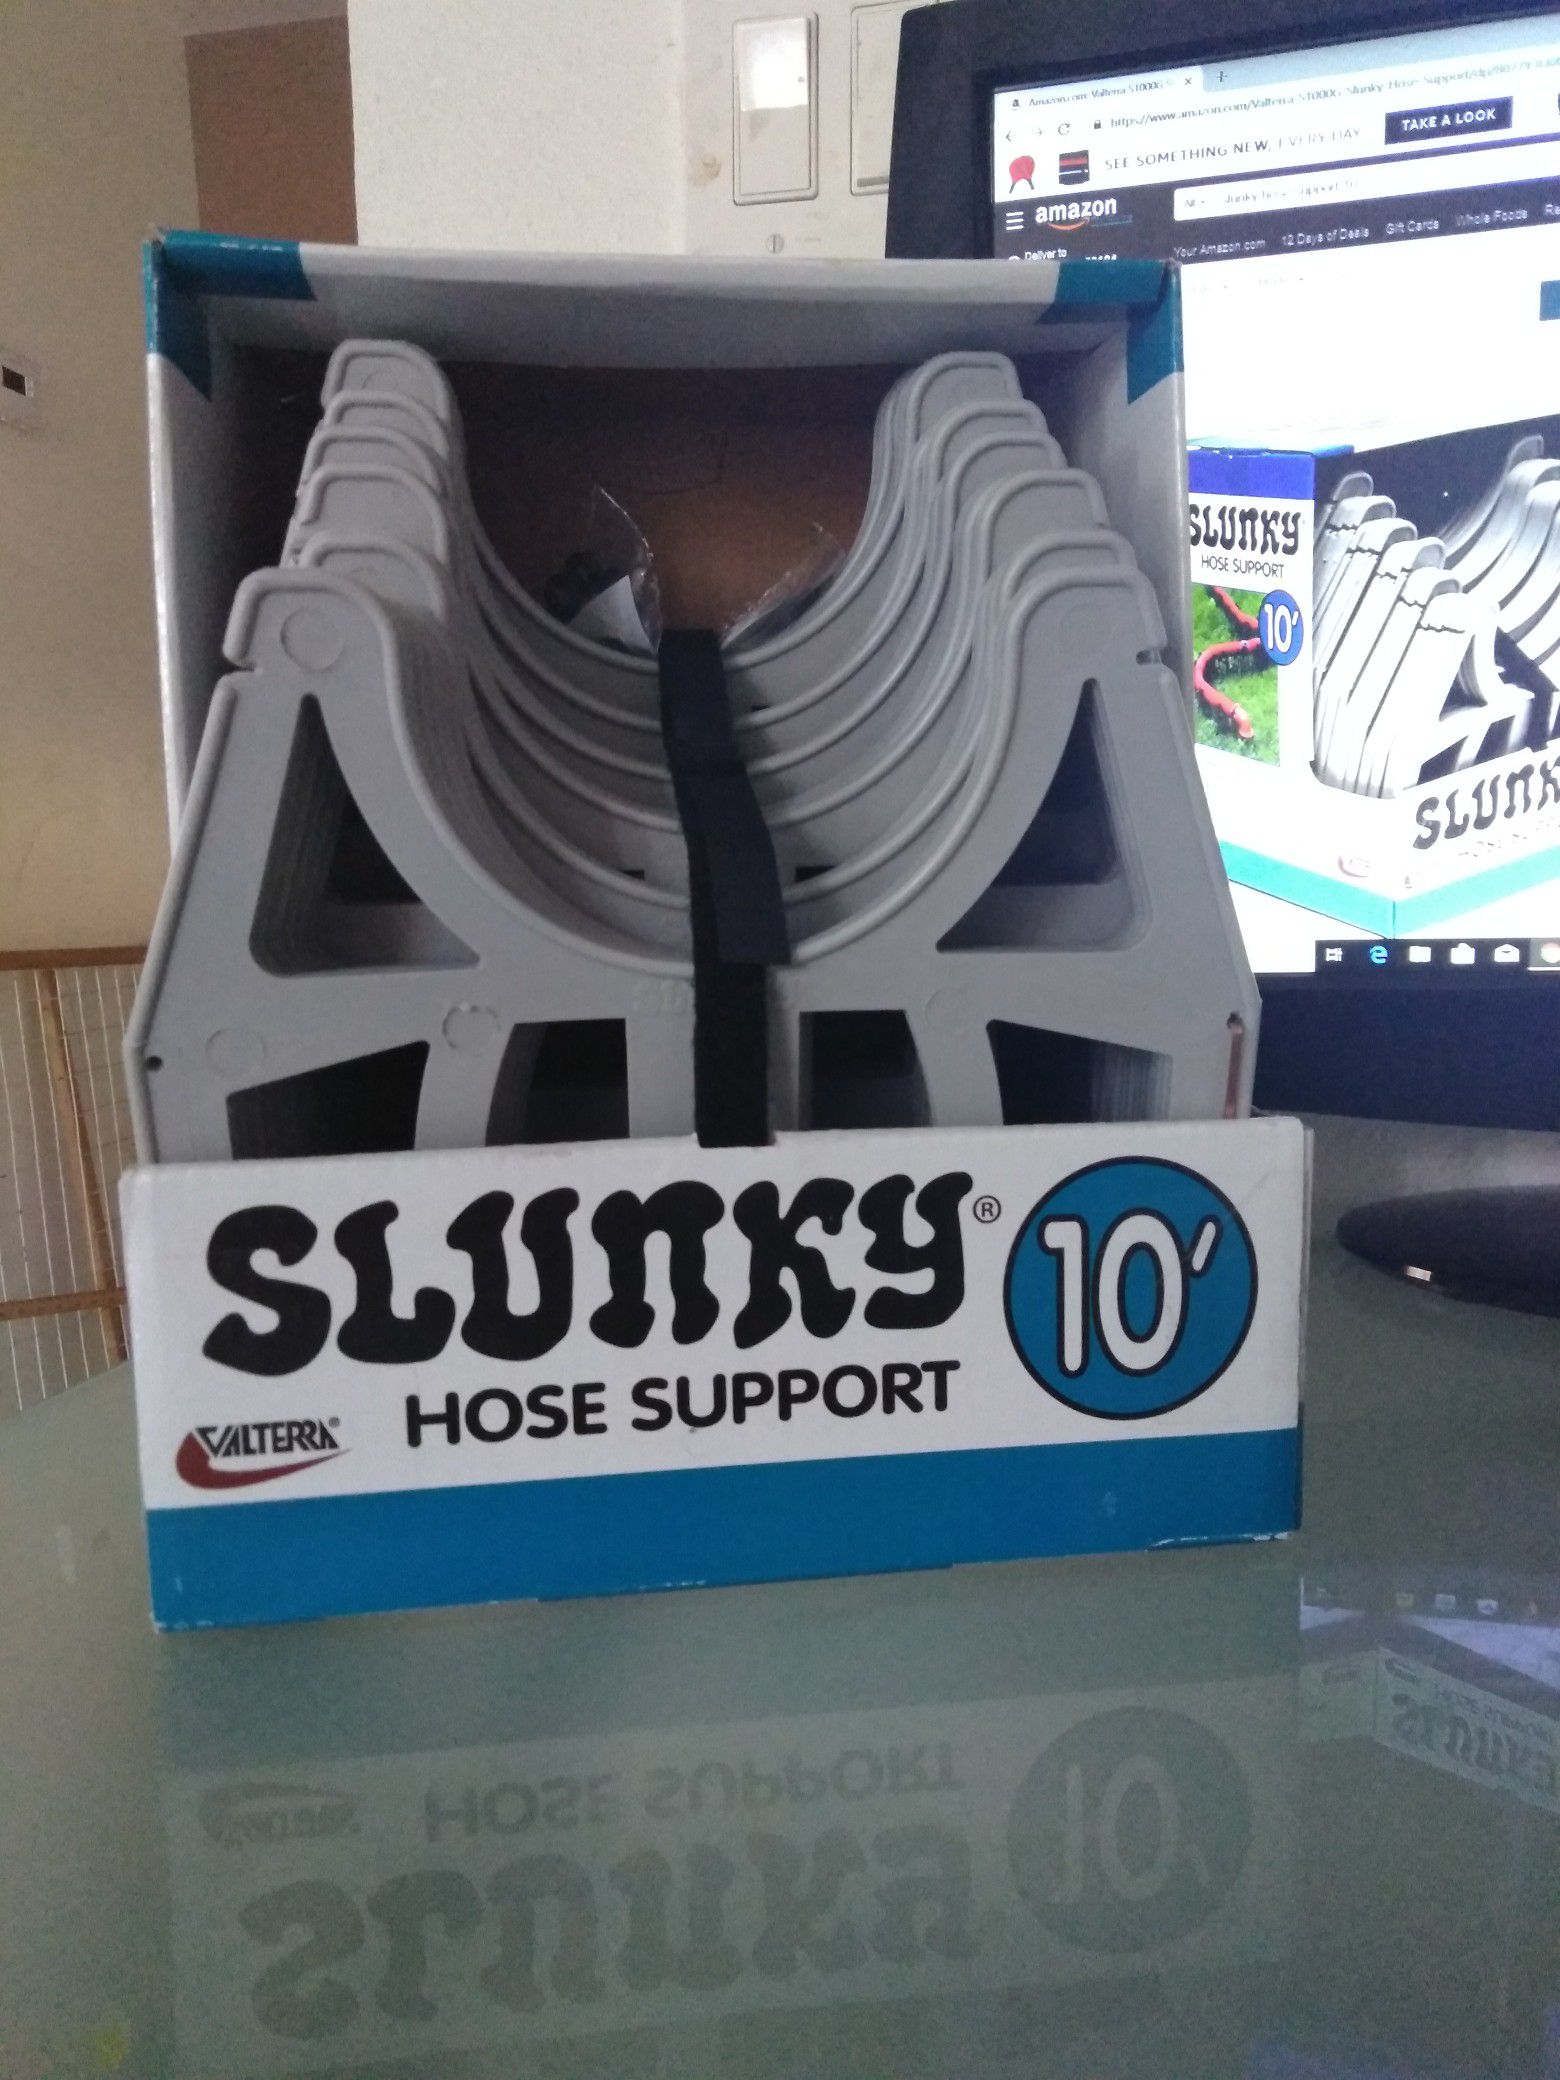 Slinky hose support 10'